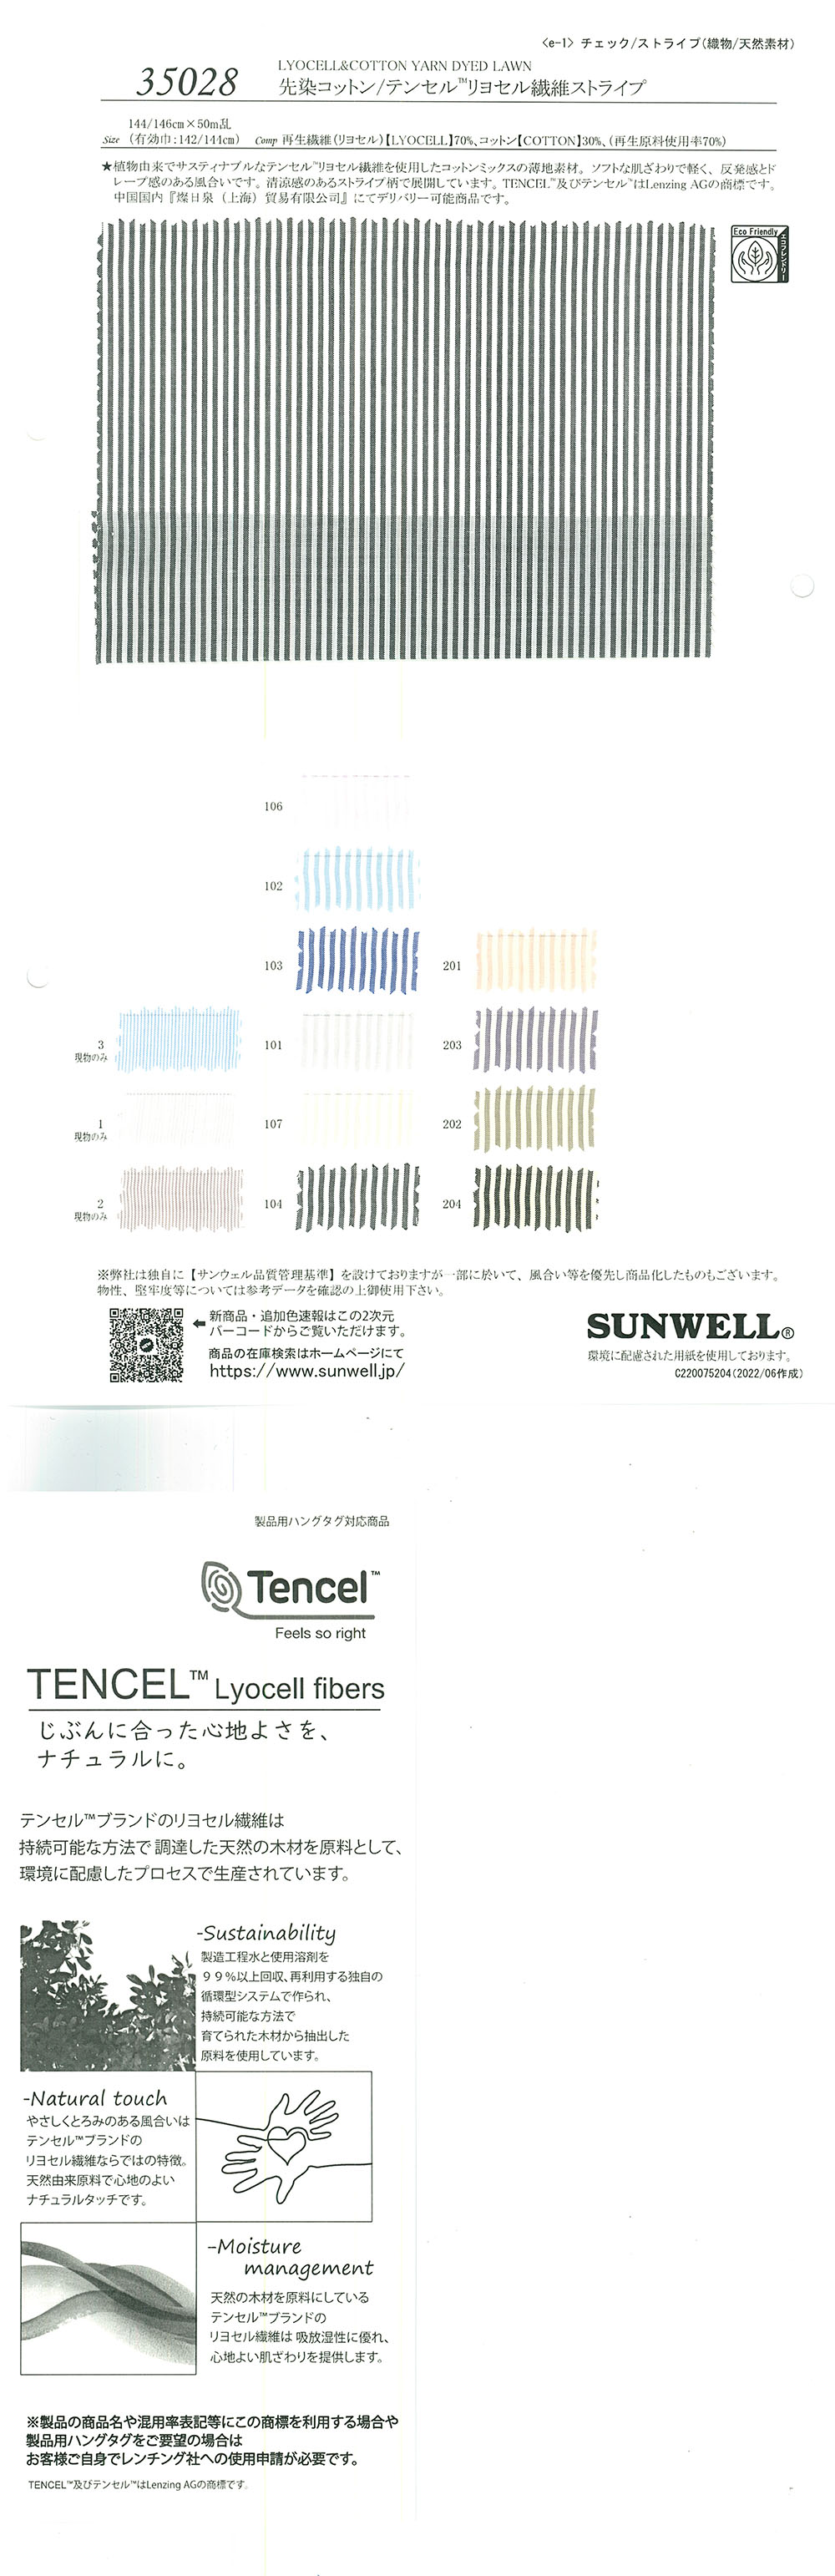 35028 Garngefärbter Baumwoll-/Tencel(TM)-Lyocell-Faserstreifen[Textilgewebe] SUNWELL